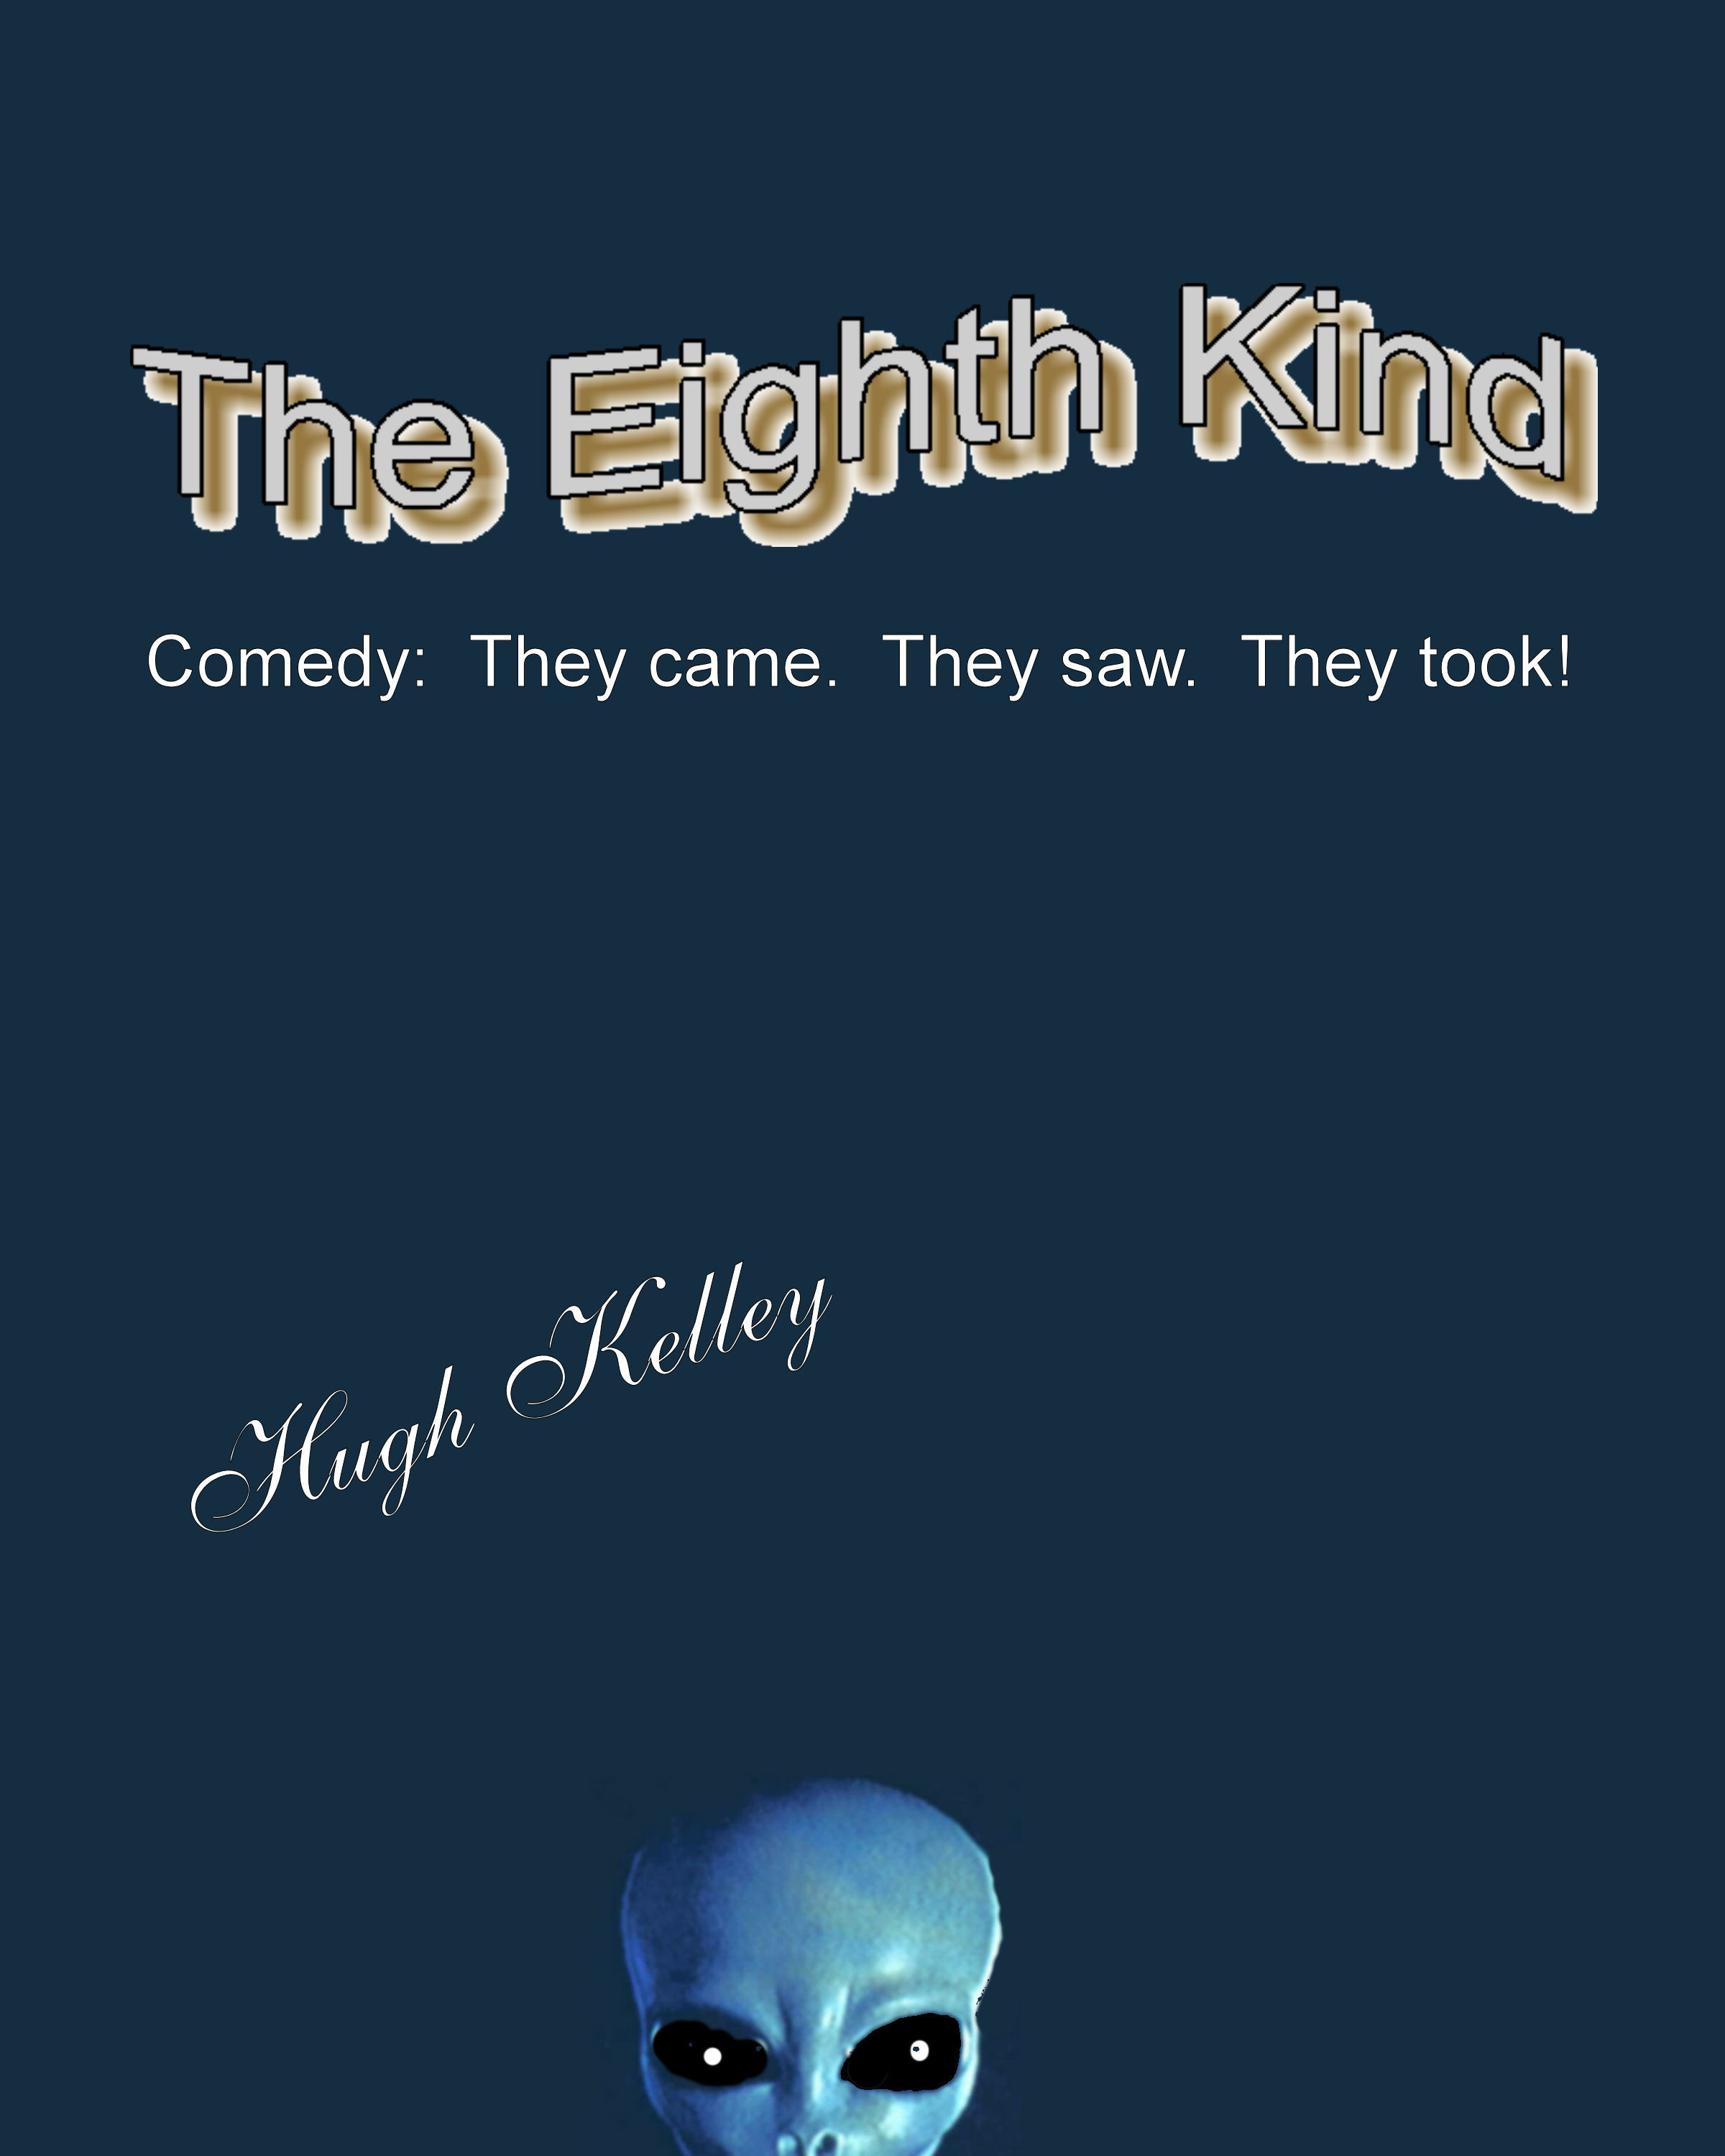 THE EIGHTH KIND Comedy